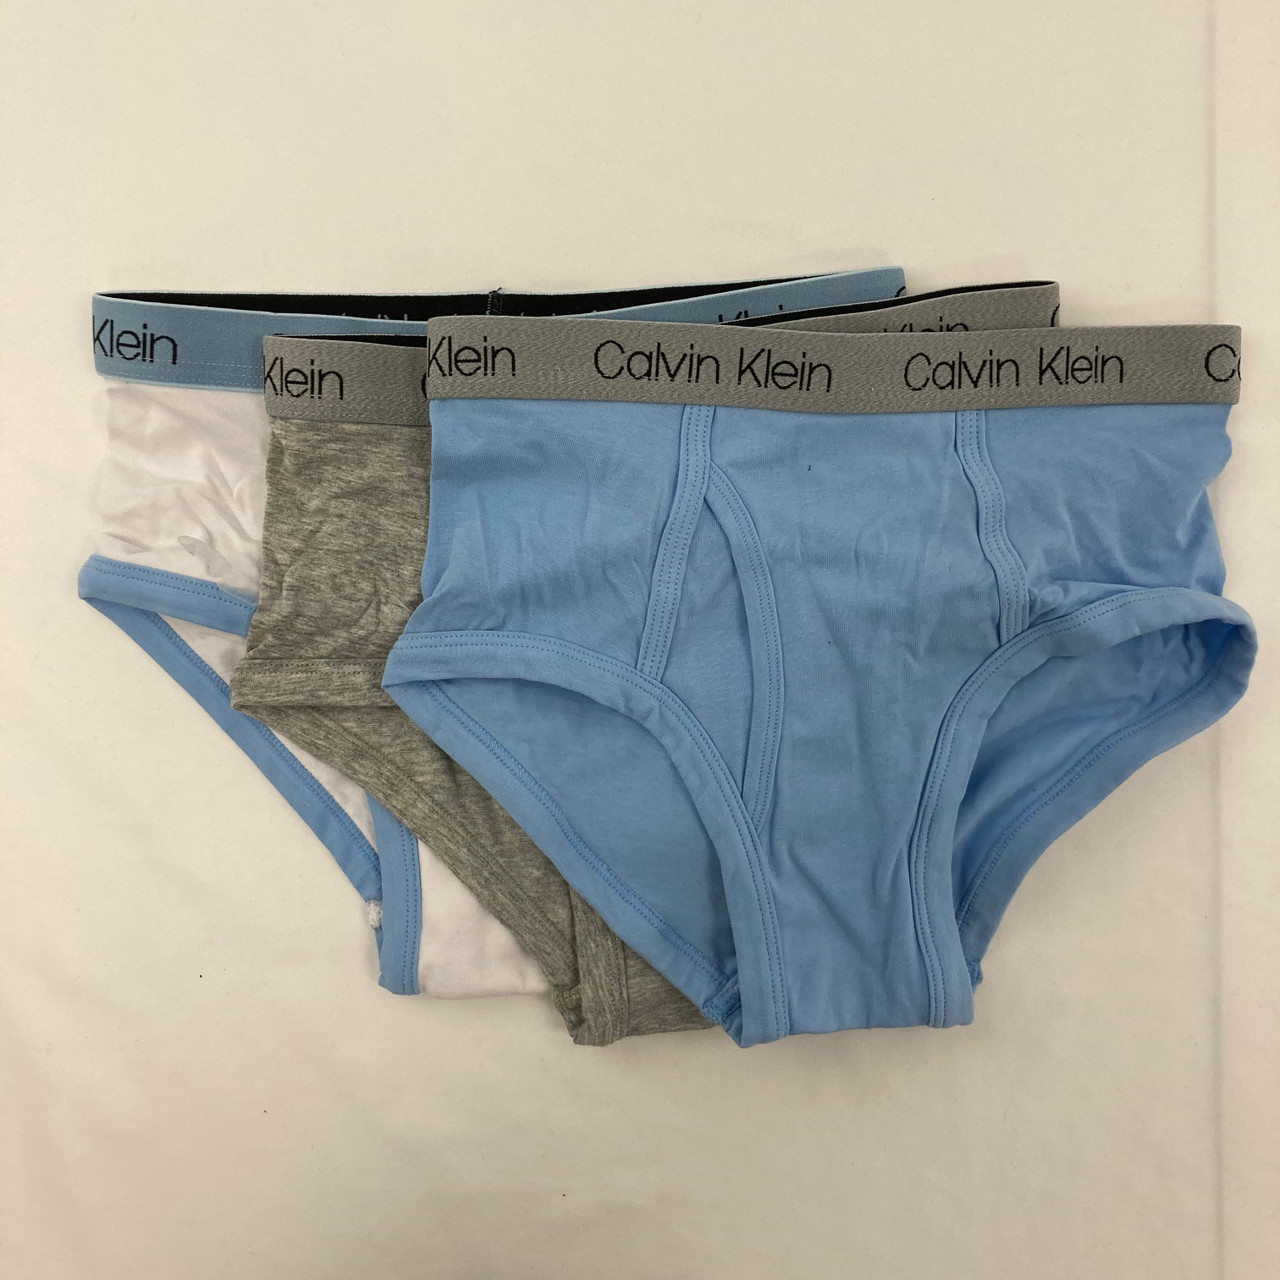 Carters Multicolored Brief Underwear Girls Size 8 NEW